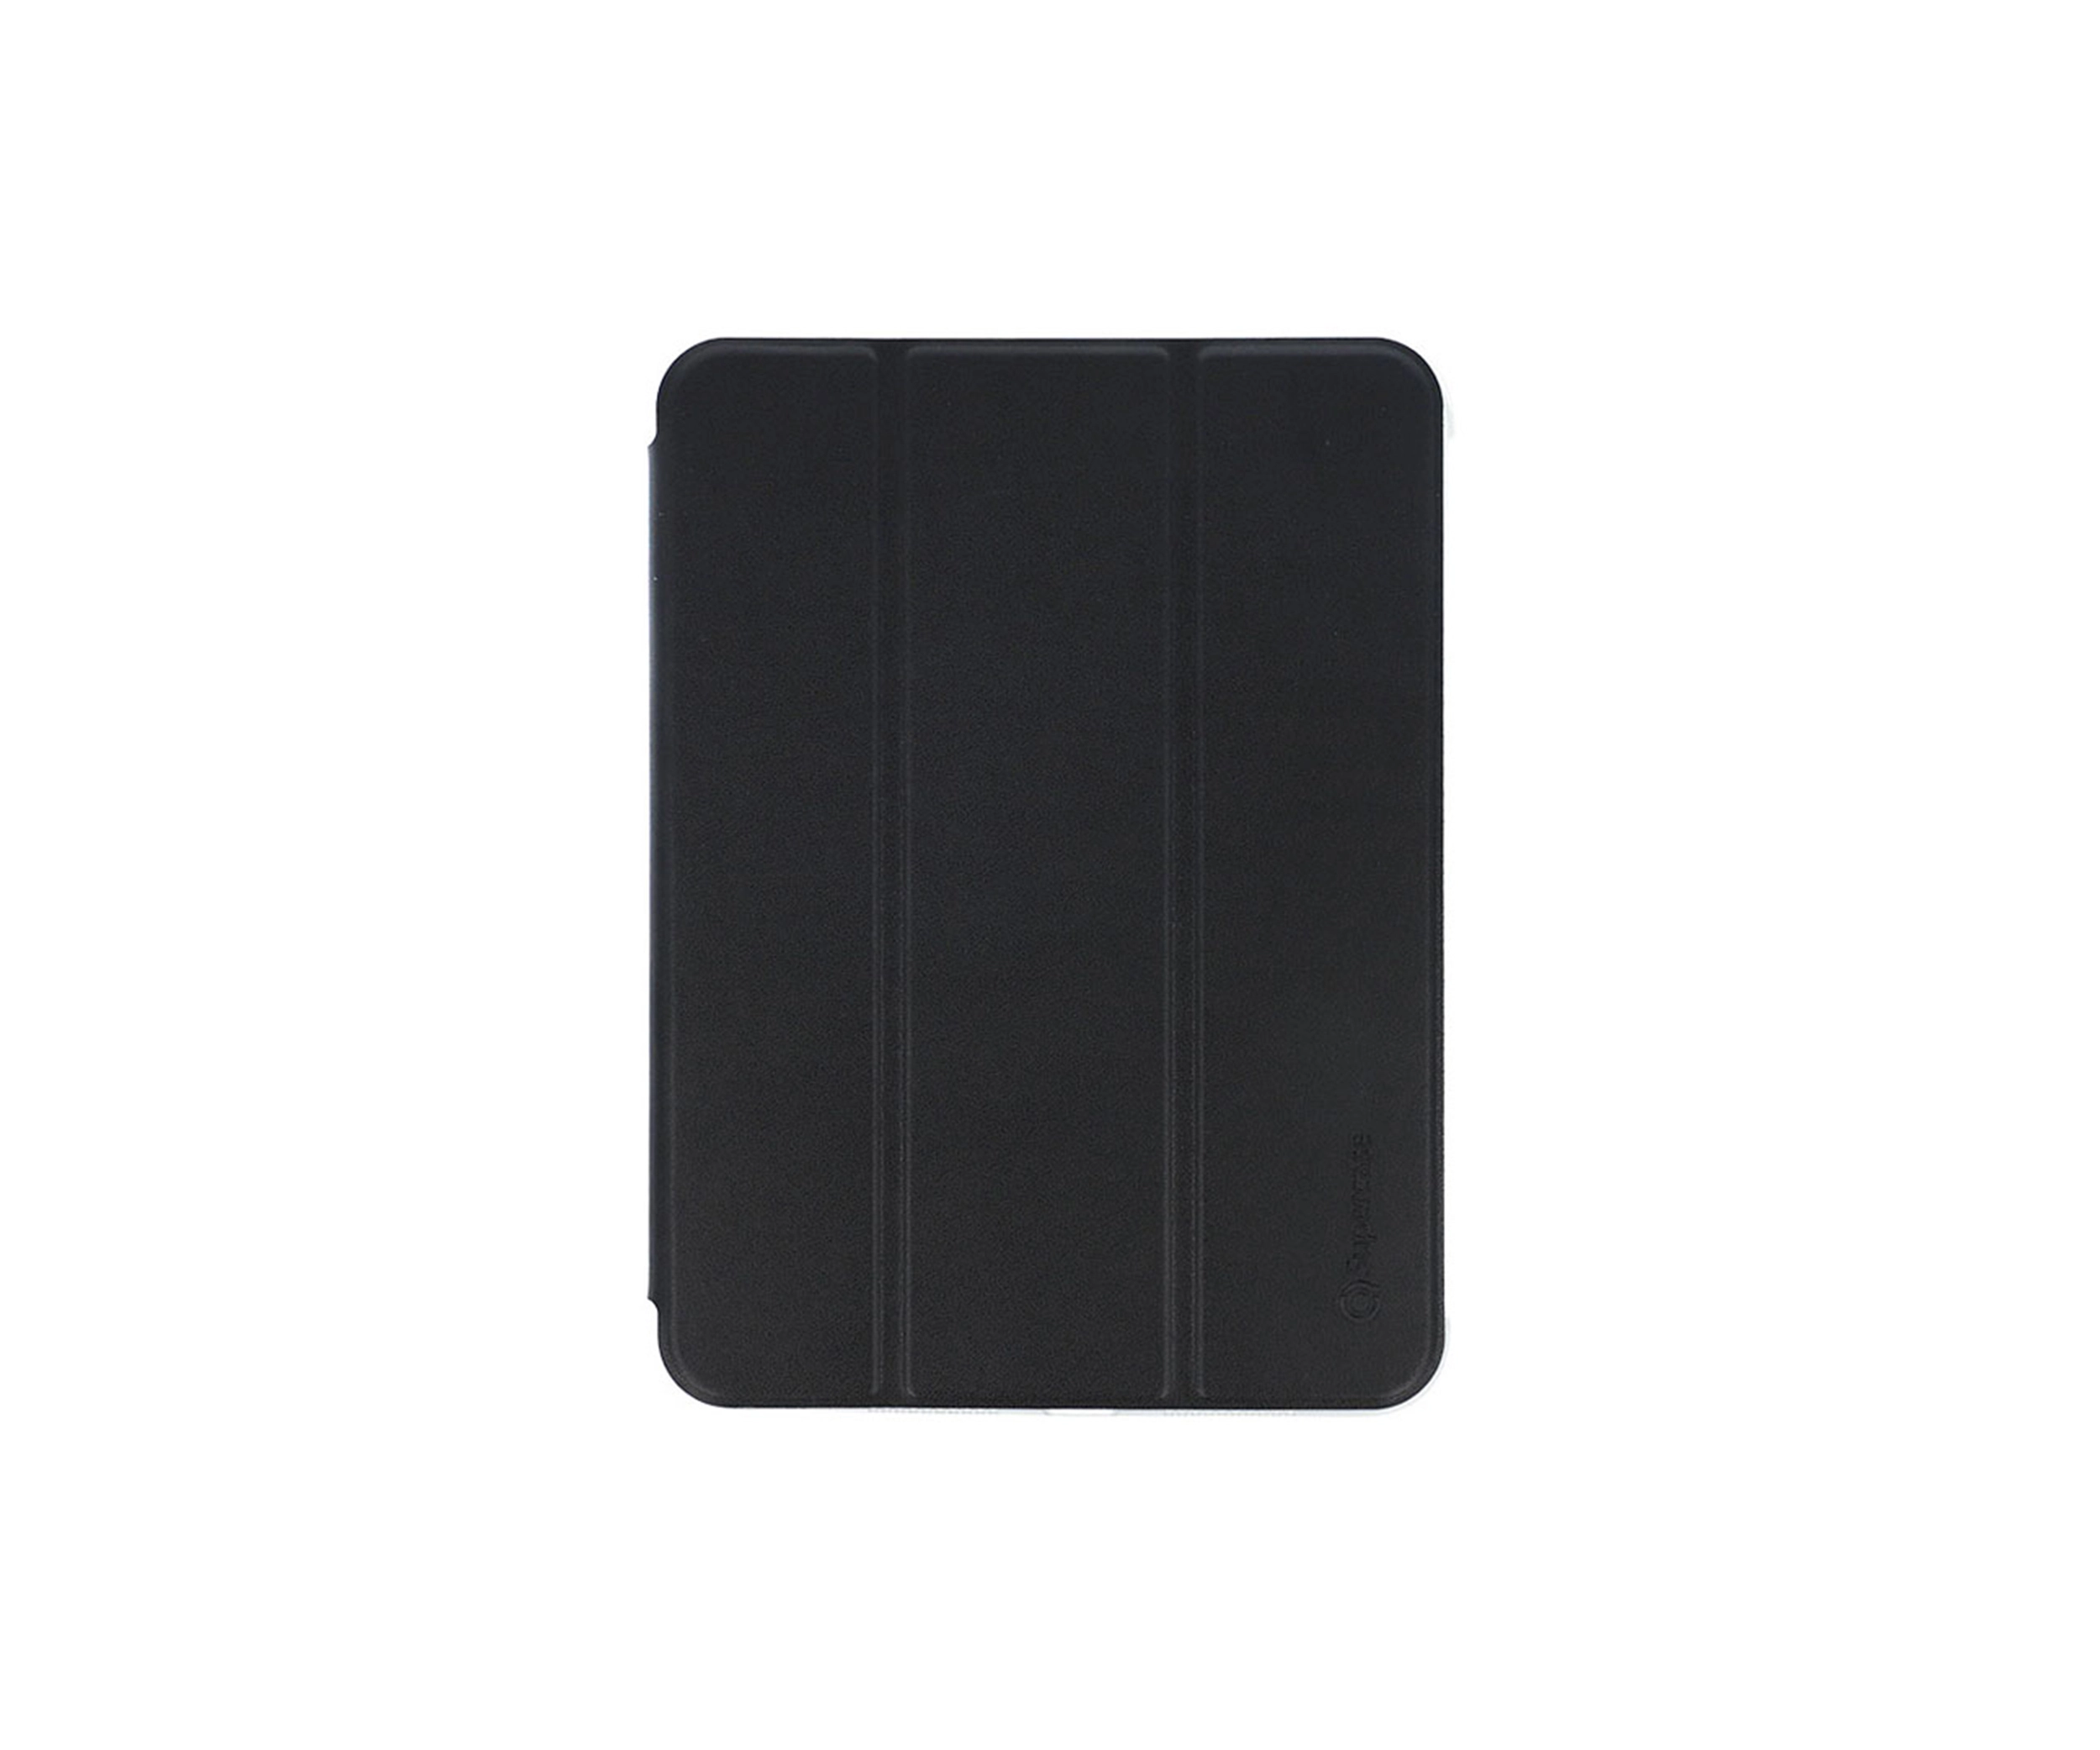 Black Frosted Silicon iPad Folio